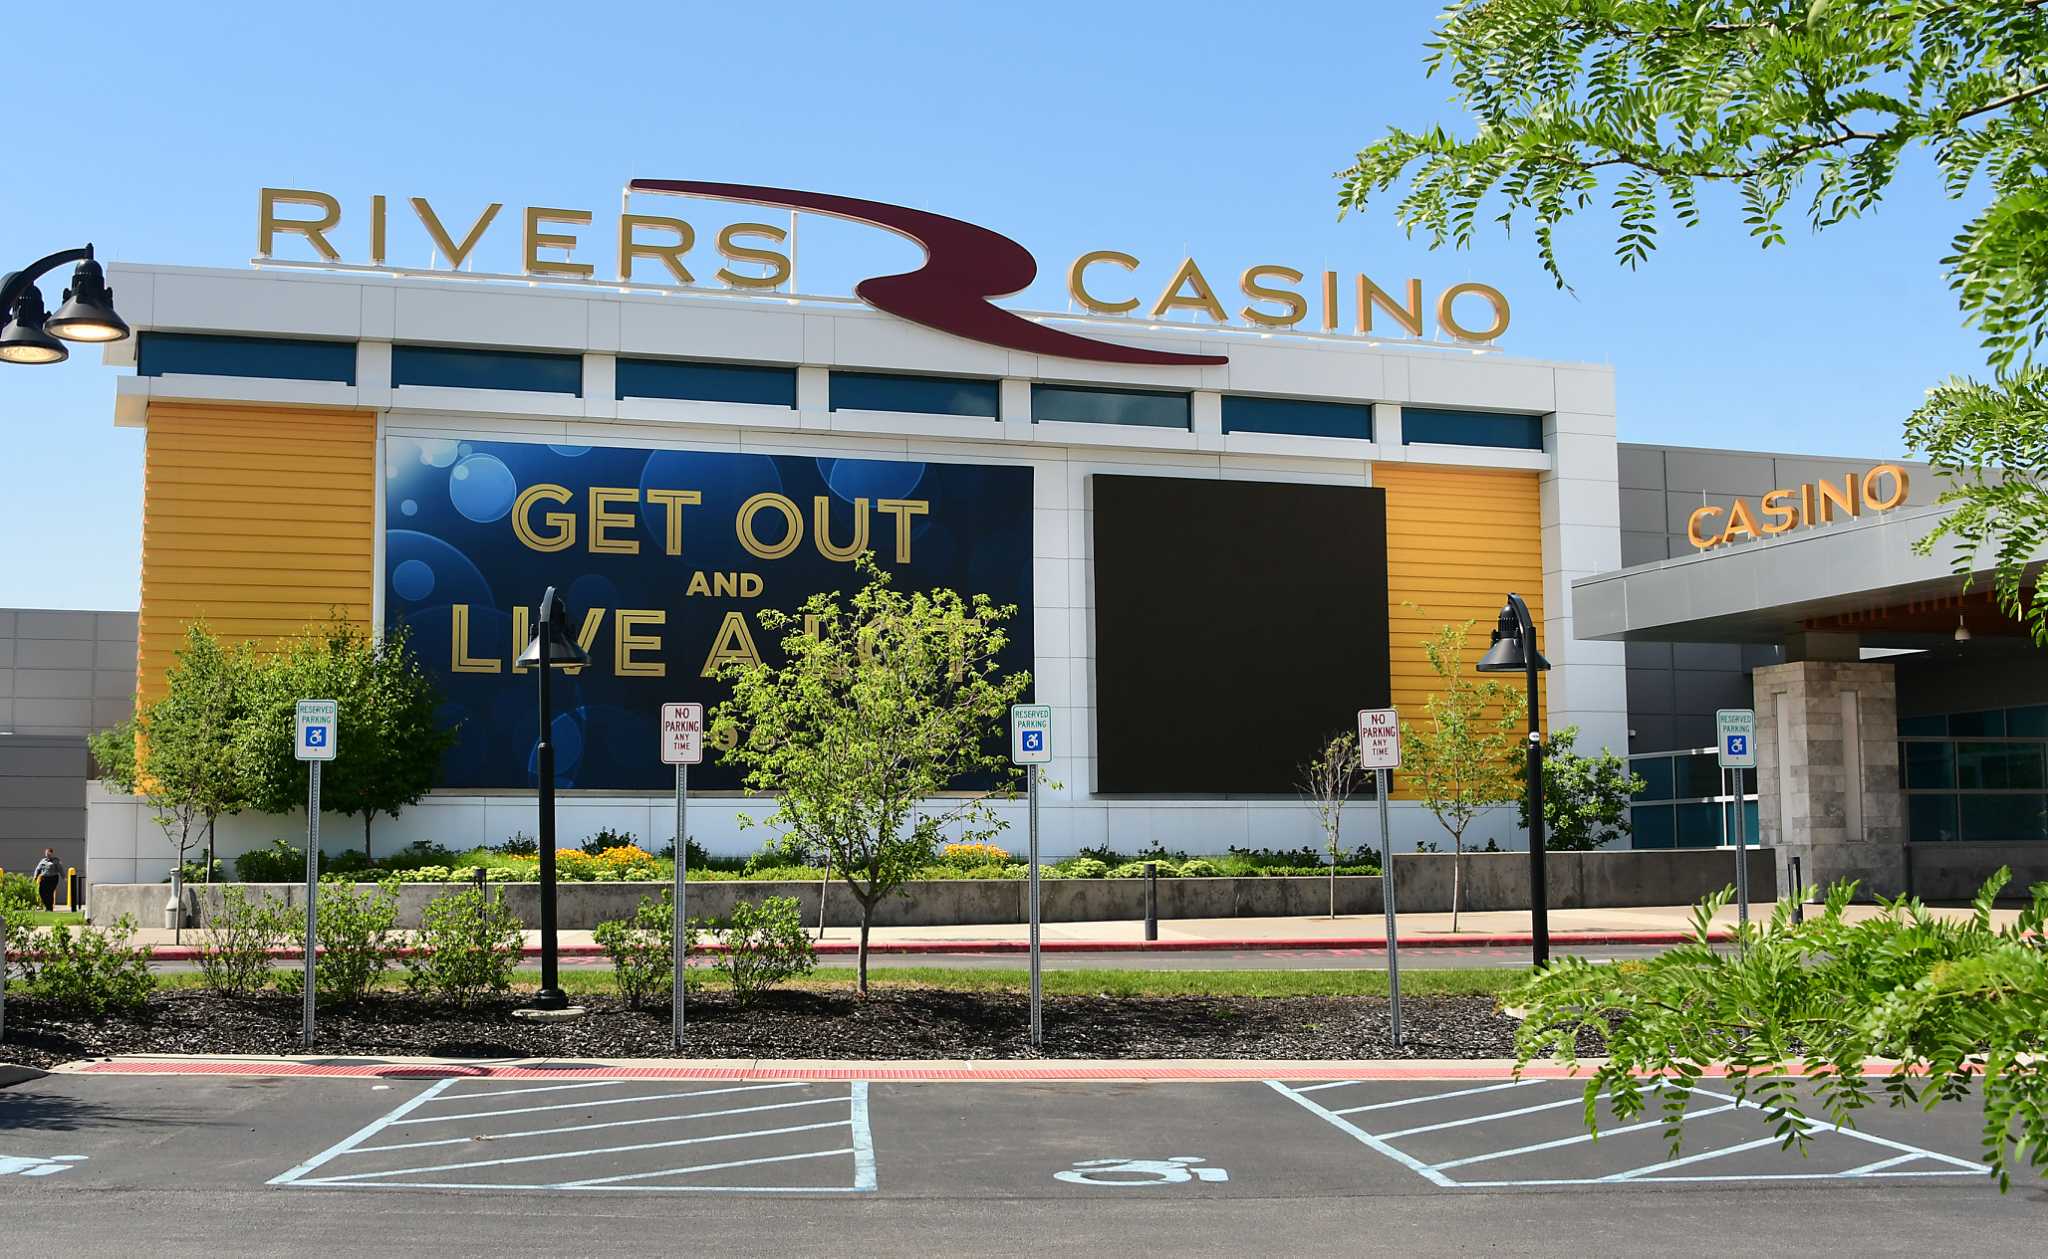 Rivers Casino restaurants extend hours